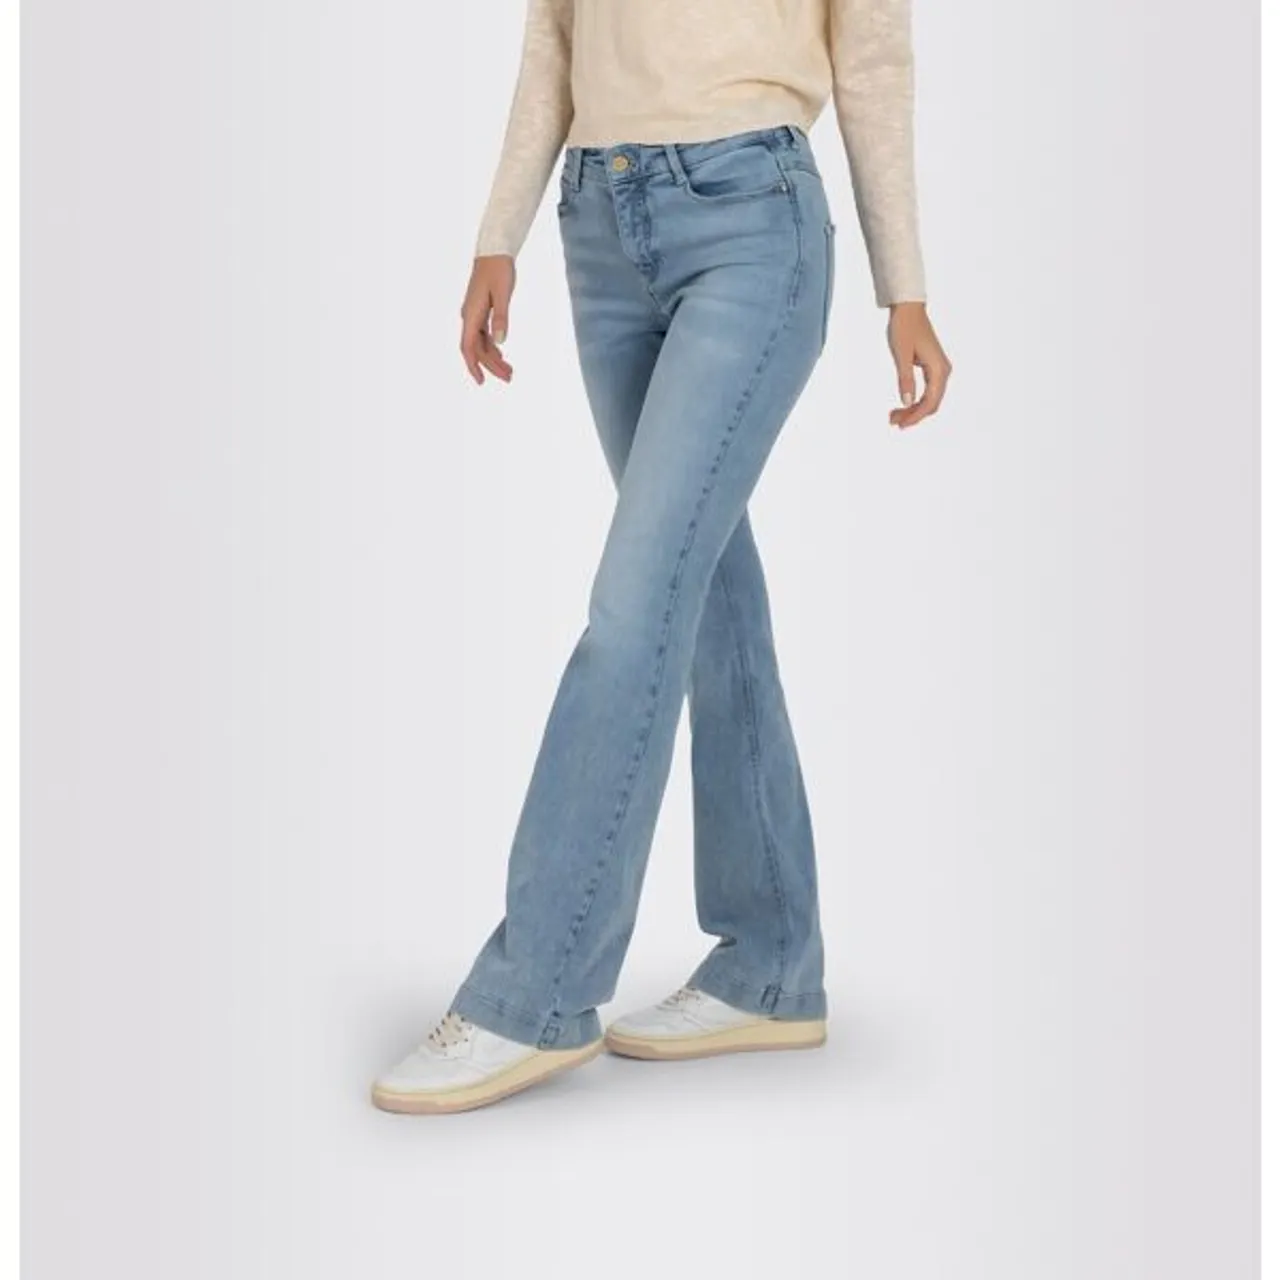 Bootcut-Jeans MAC "Dream-Boot" Gr. 46, Länge 30, blau (x ummer blue) Damen Jeans Röhrenjeans Gerade geschnitten mit leicht ausgestelltem Bein